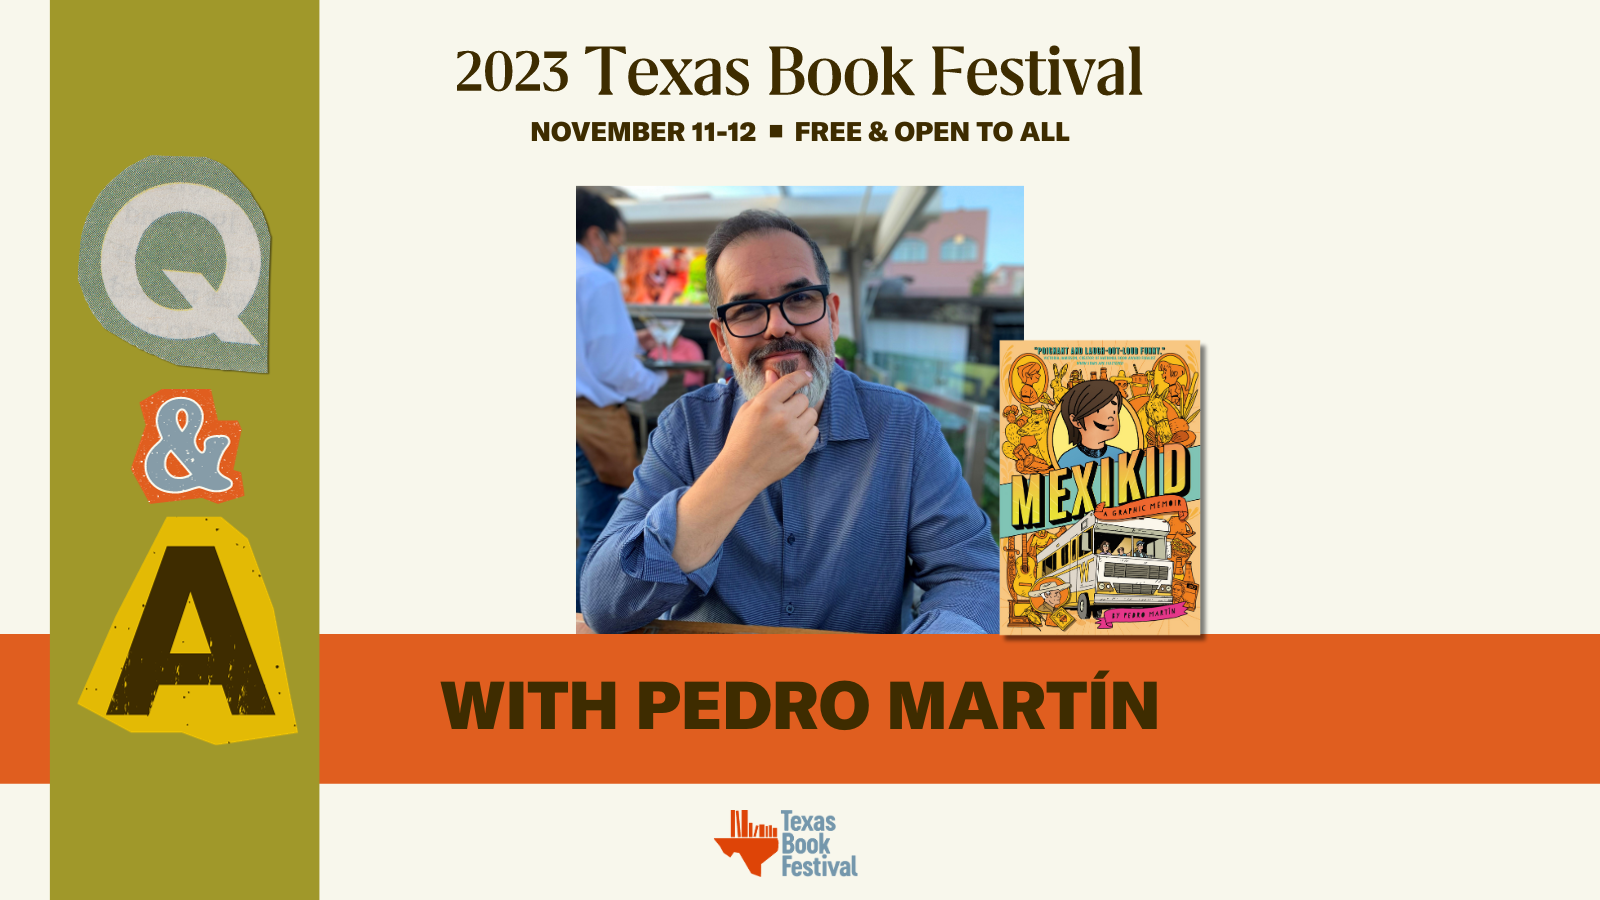 Q&A with Pedro Martin